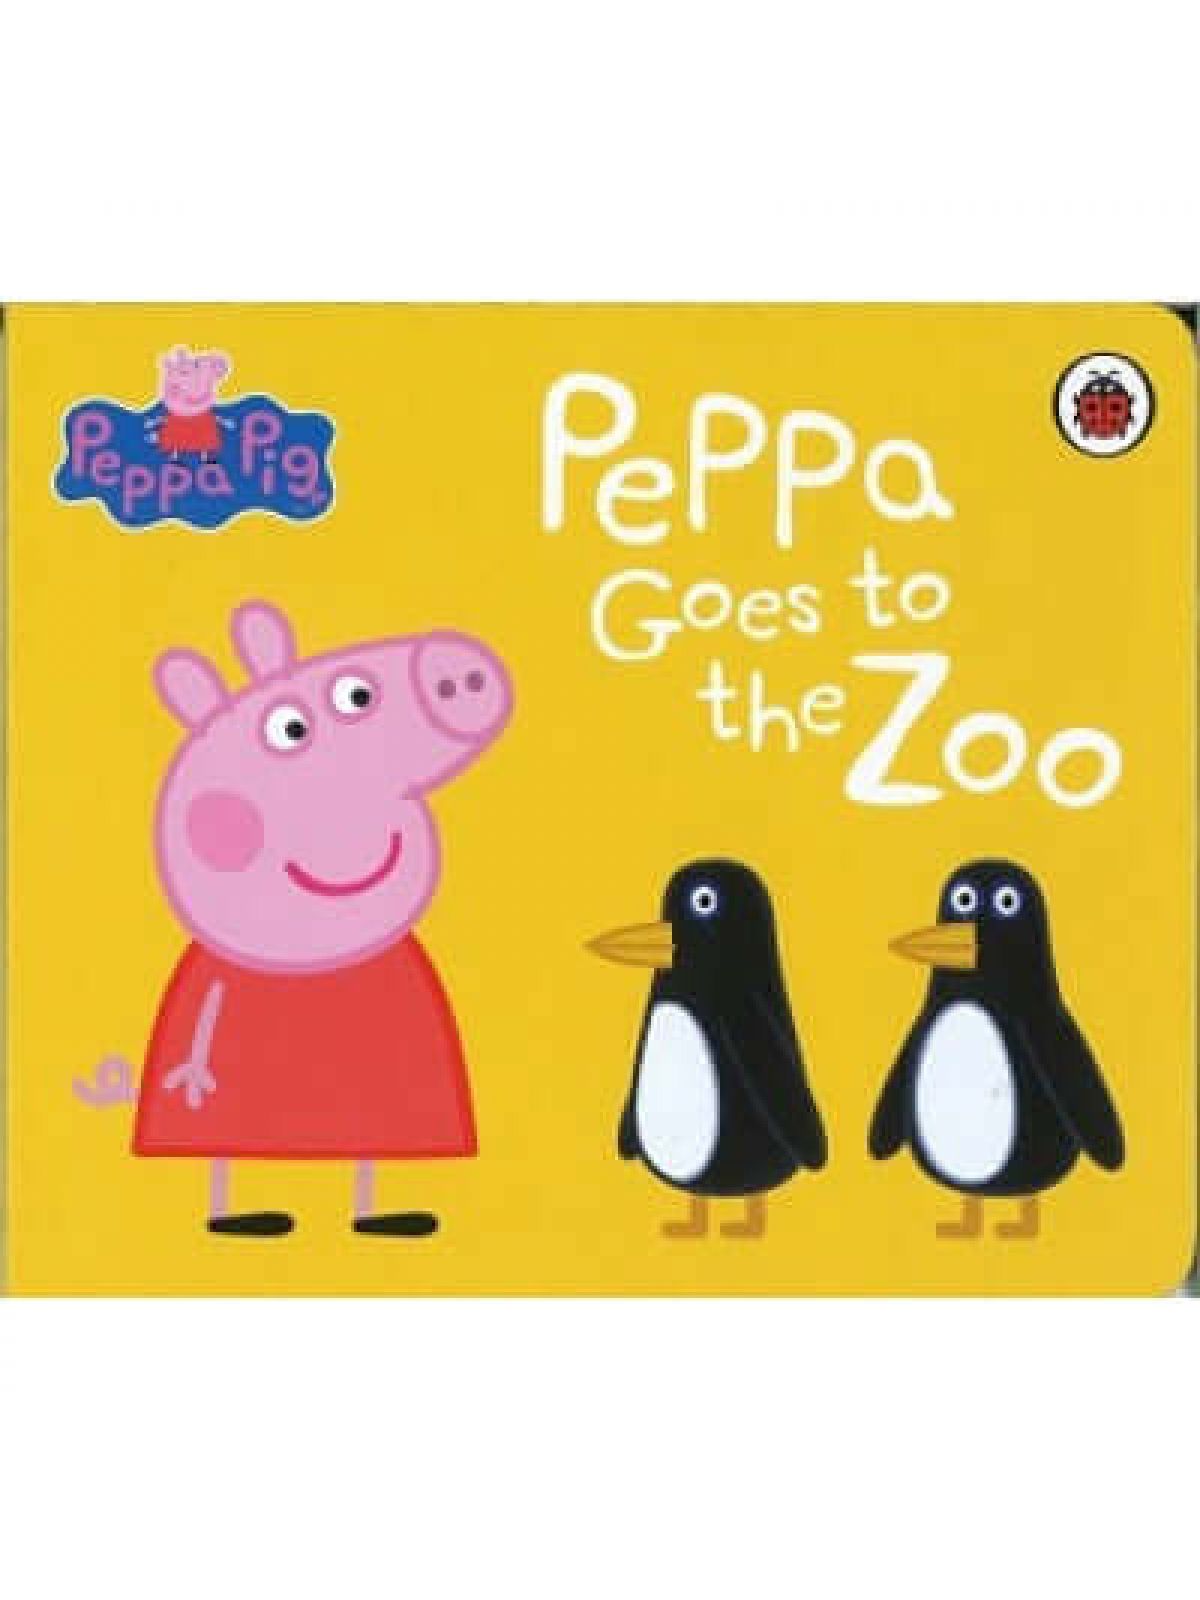 PEPPA GOES TO THE ZOO  Купить Книгу на Английском